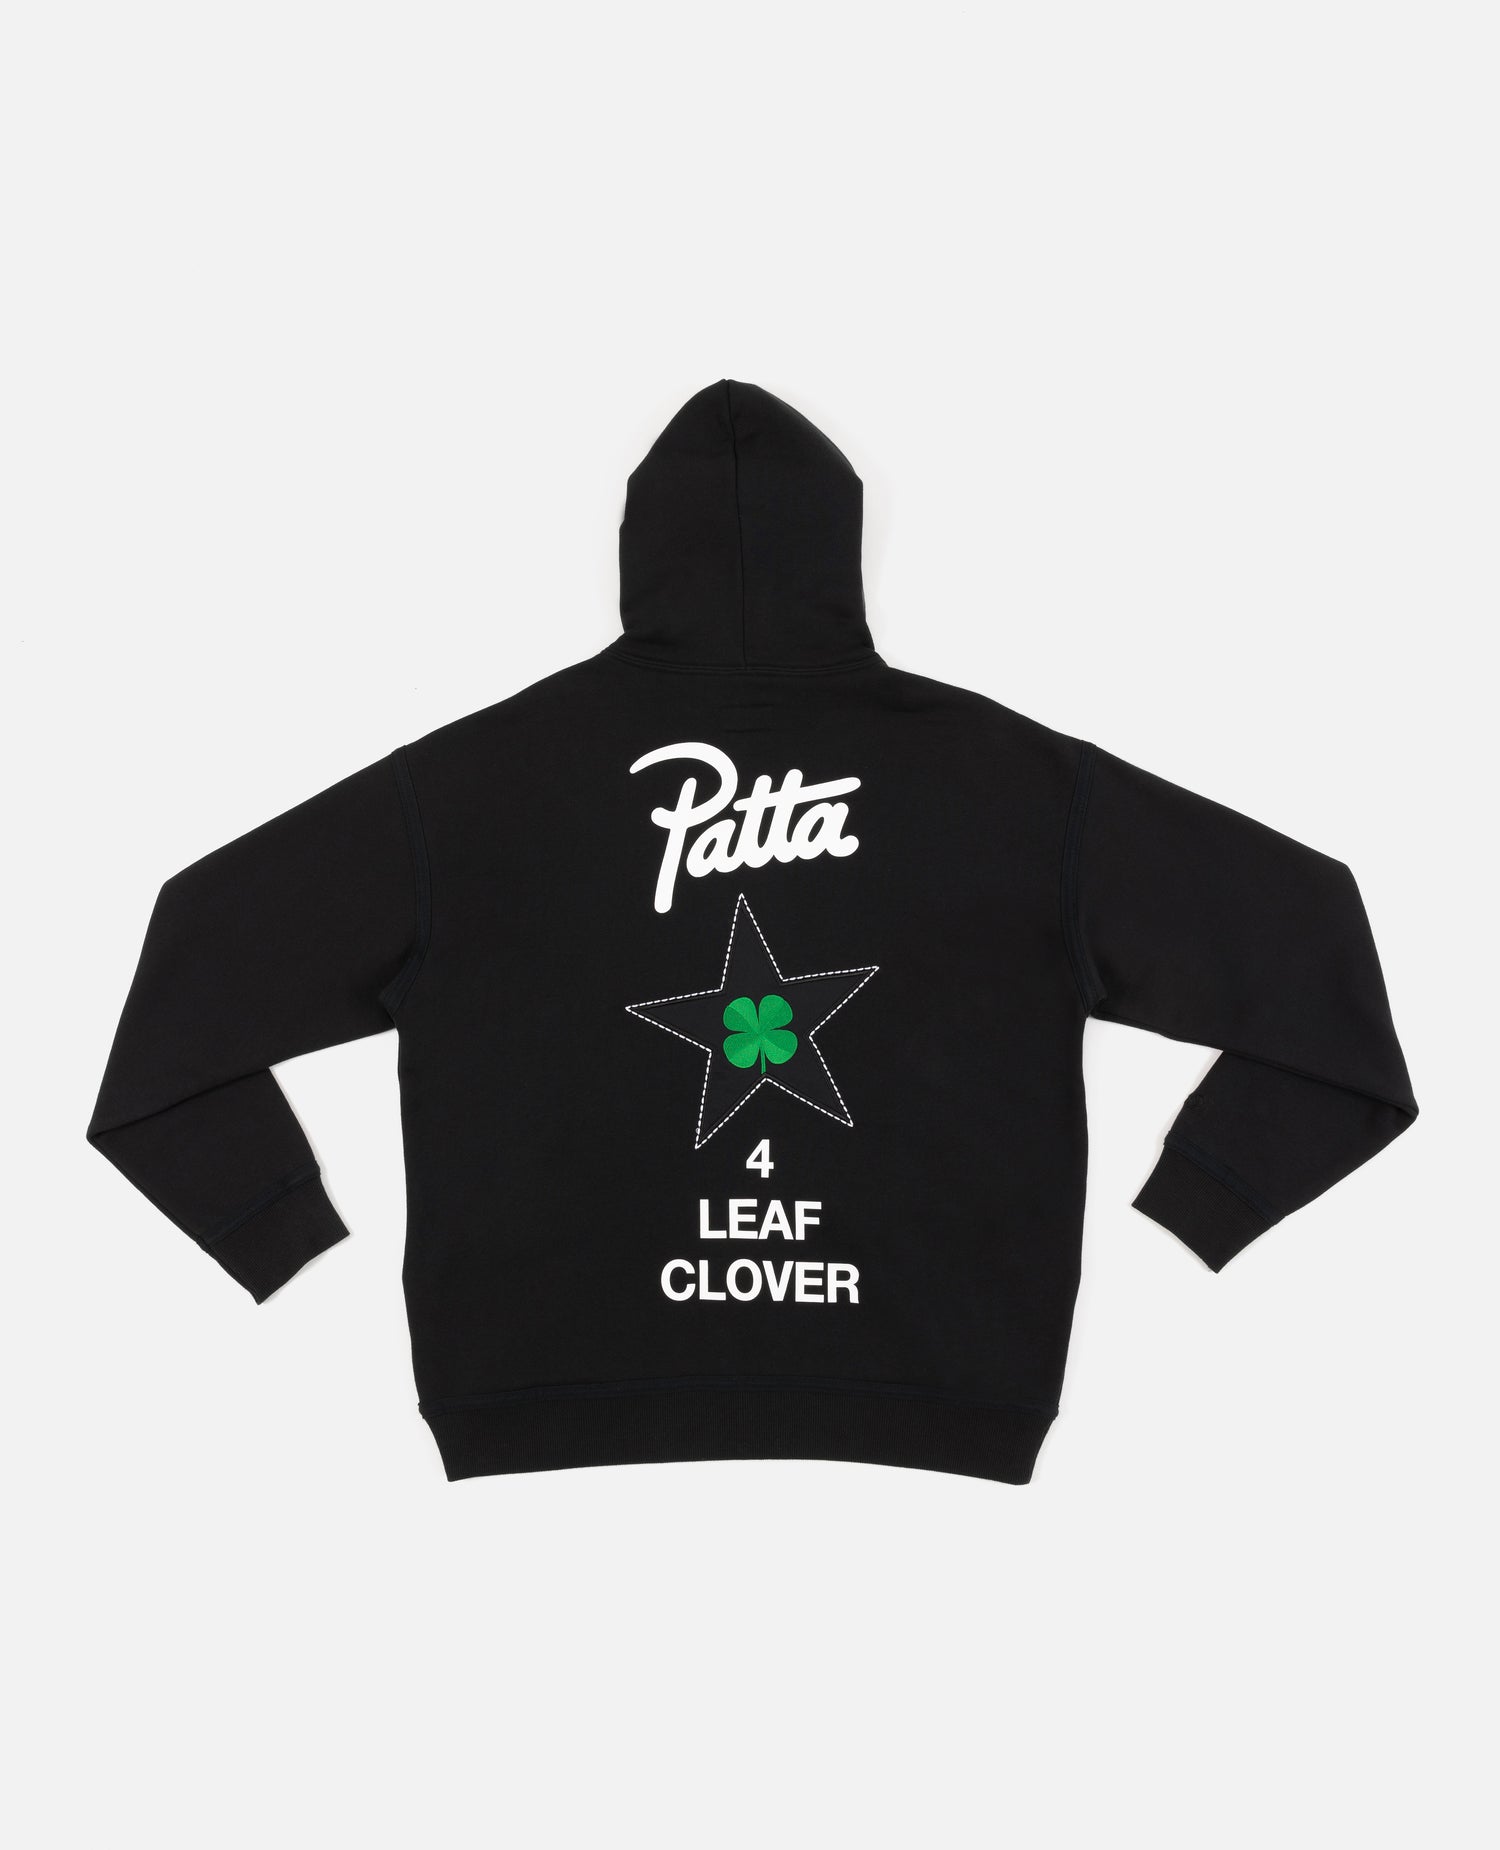 Patta x Converse 4 Leaf Clover Hooded Sweater (Black)